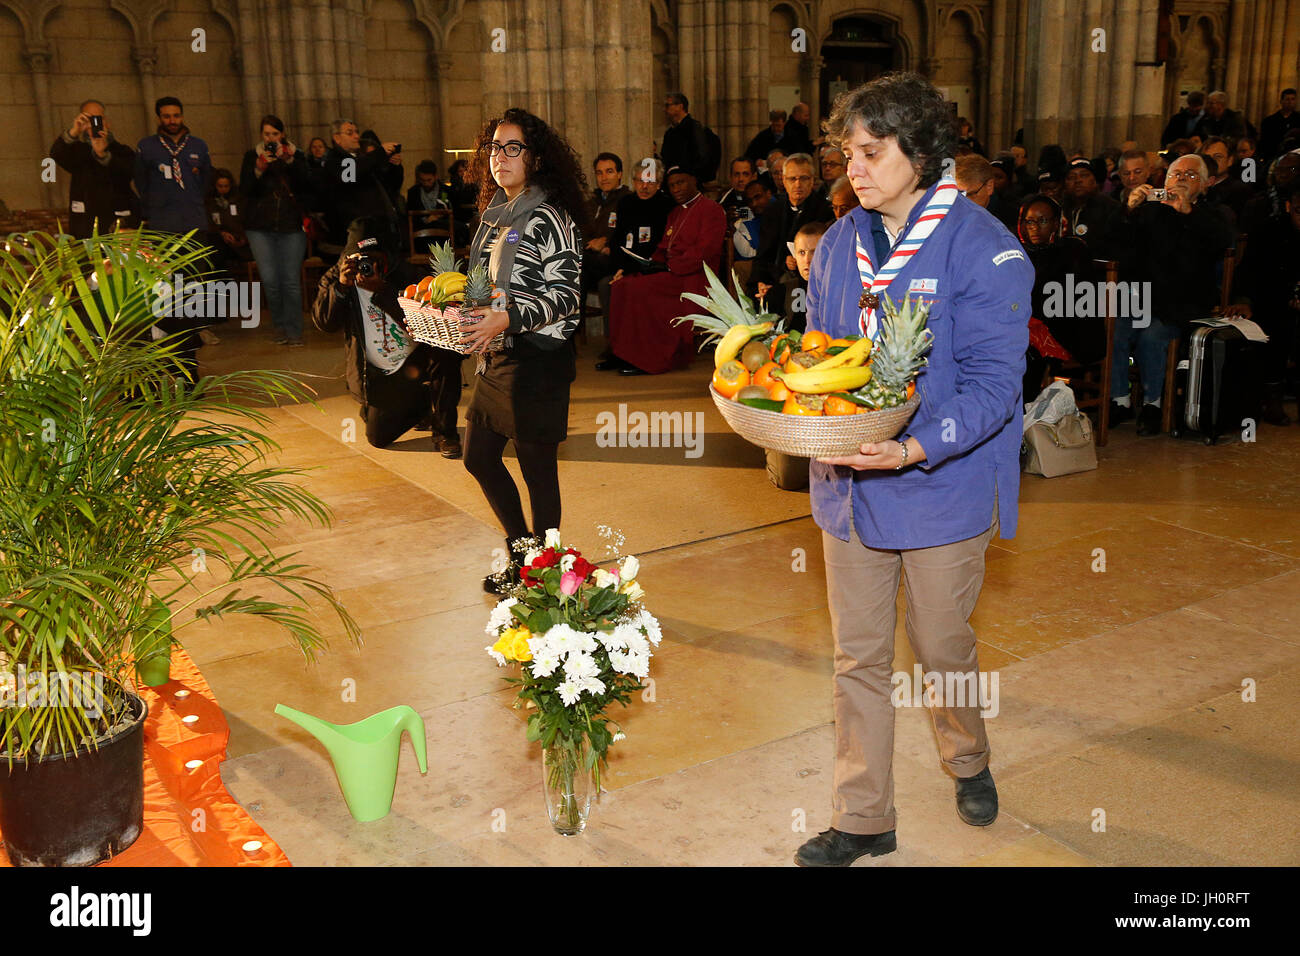 Inter-religiöse Feier für Klima in Saint Denis Kathedrale/Basilika. Frankreich. Stockfoto